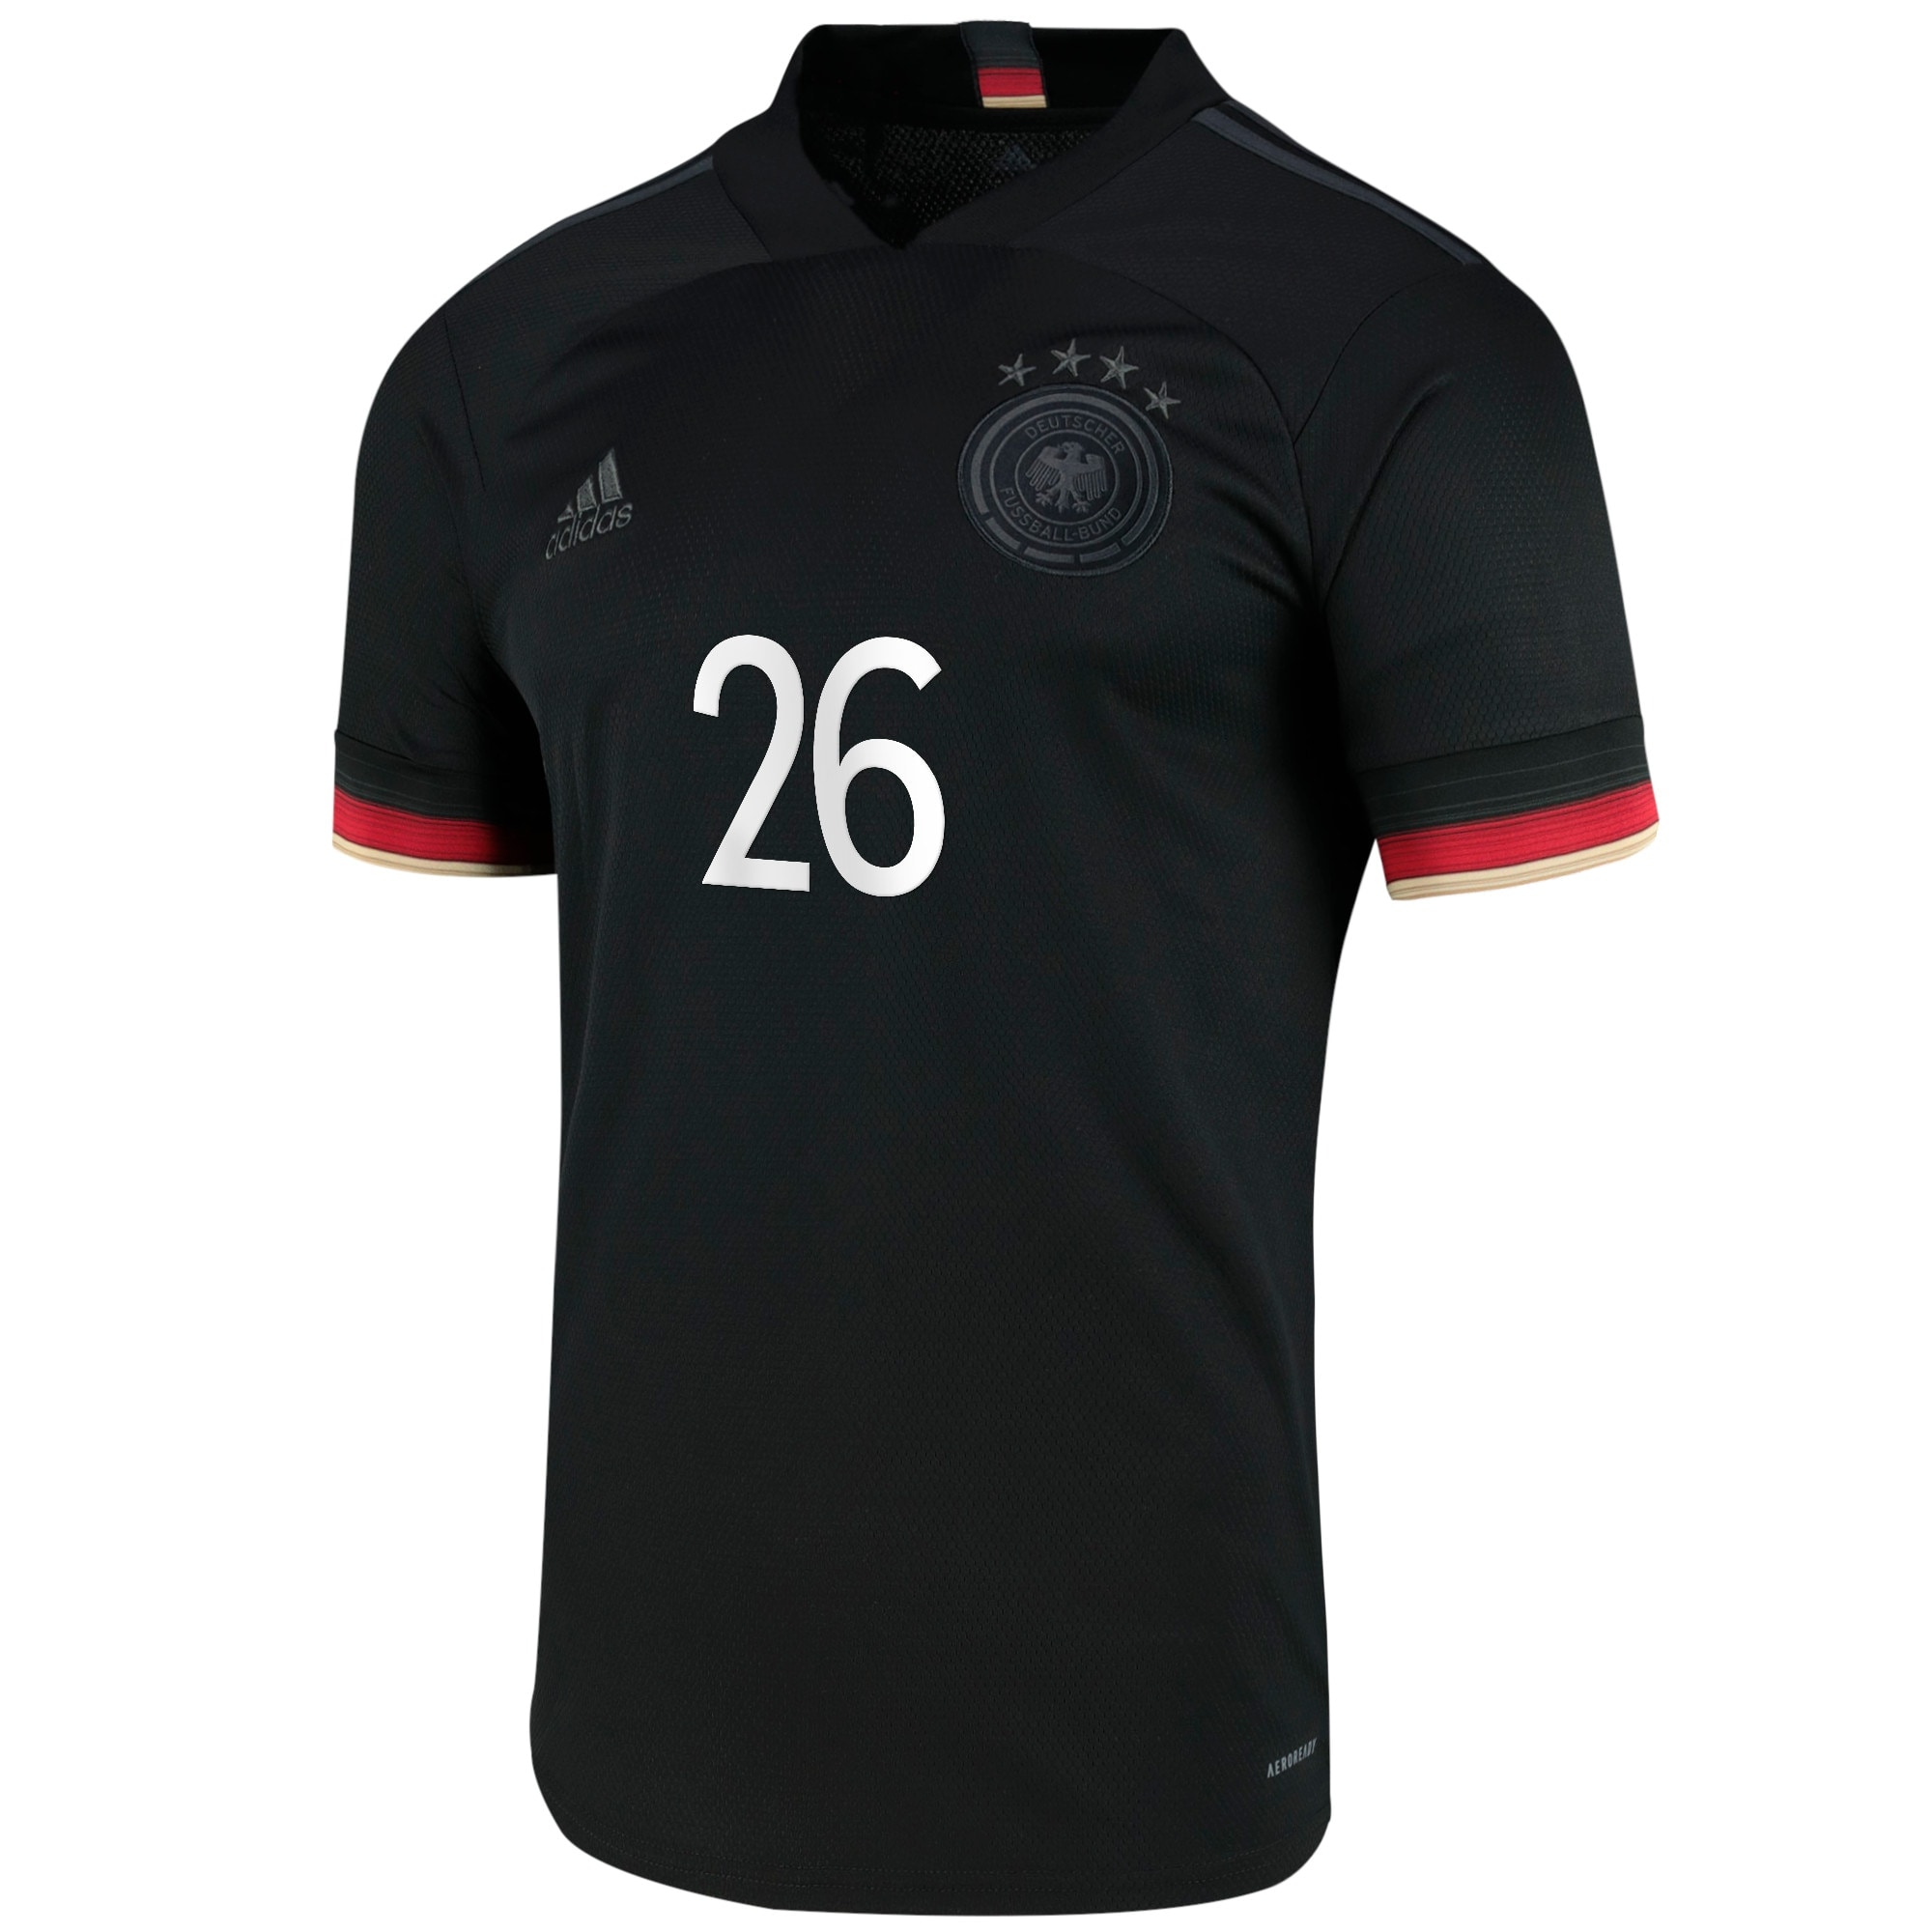 Germany Away Shirt 2021-22 with Gunter 26 printing